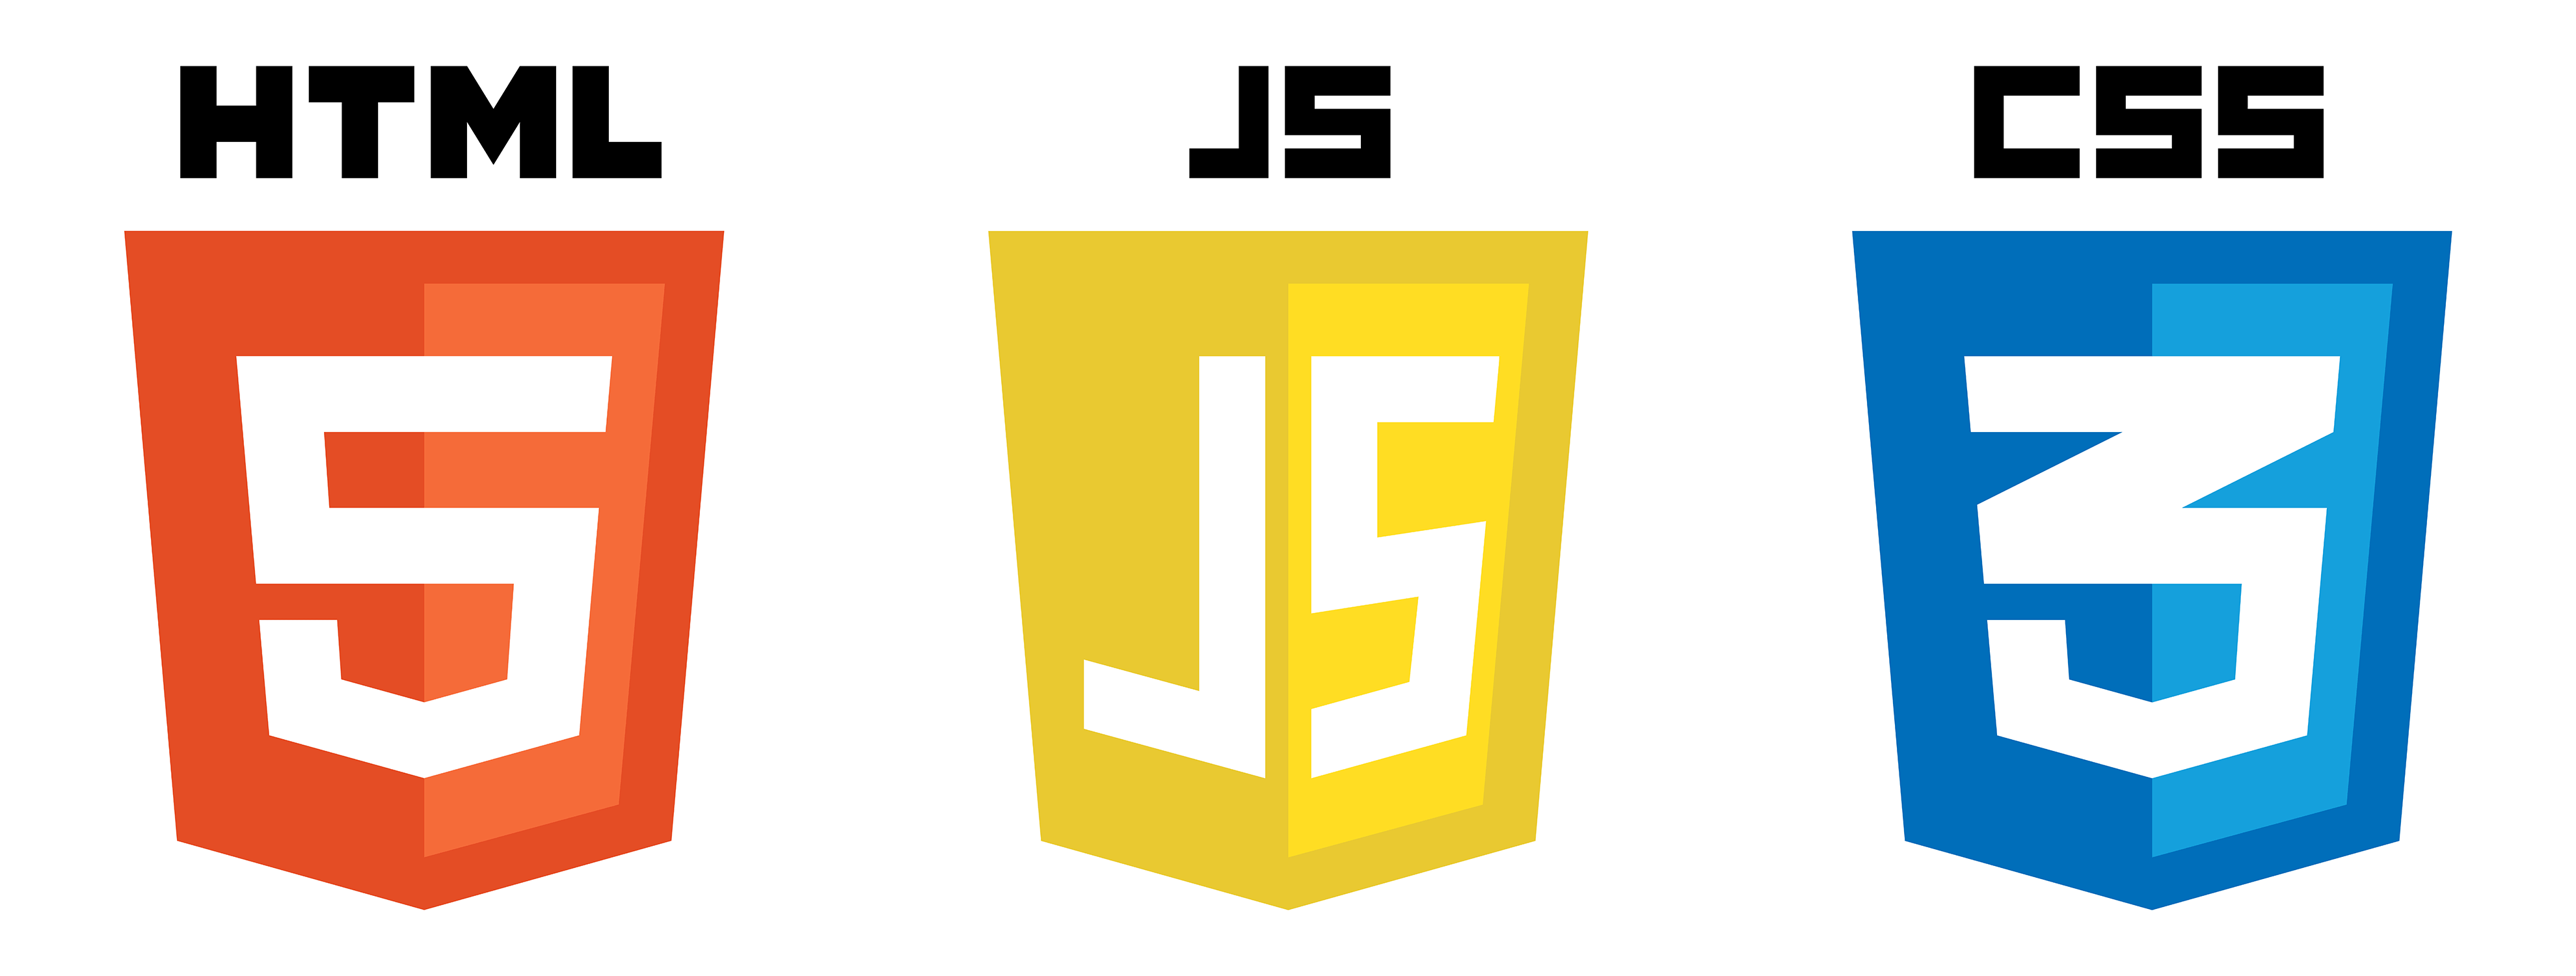 JavaScript Logo - Javascript logo png 9 » PNG Image